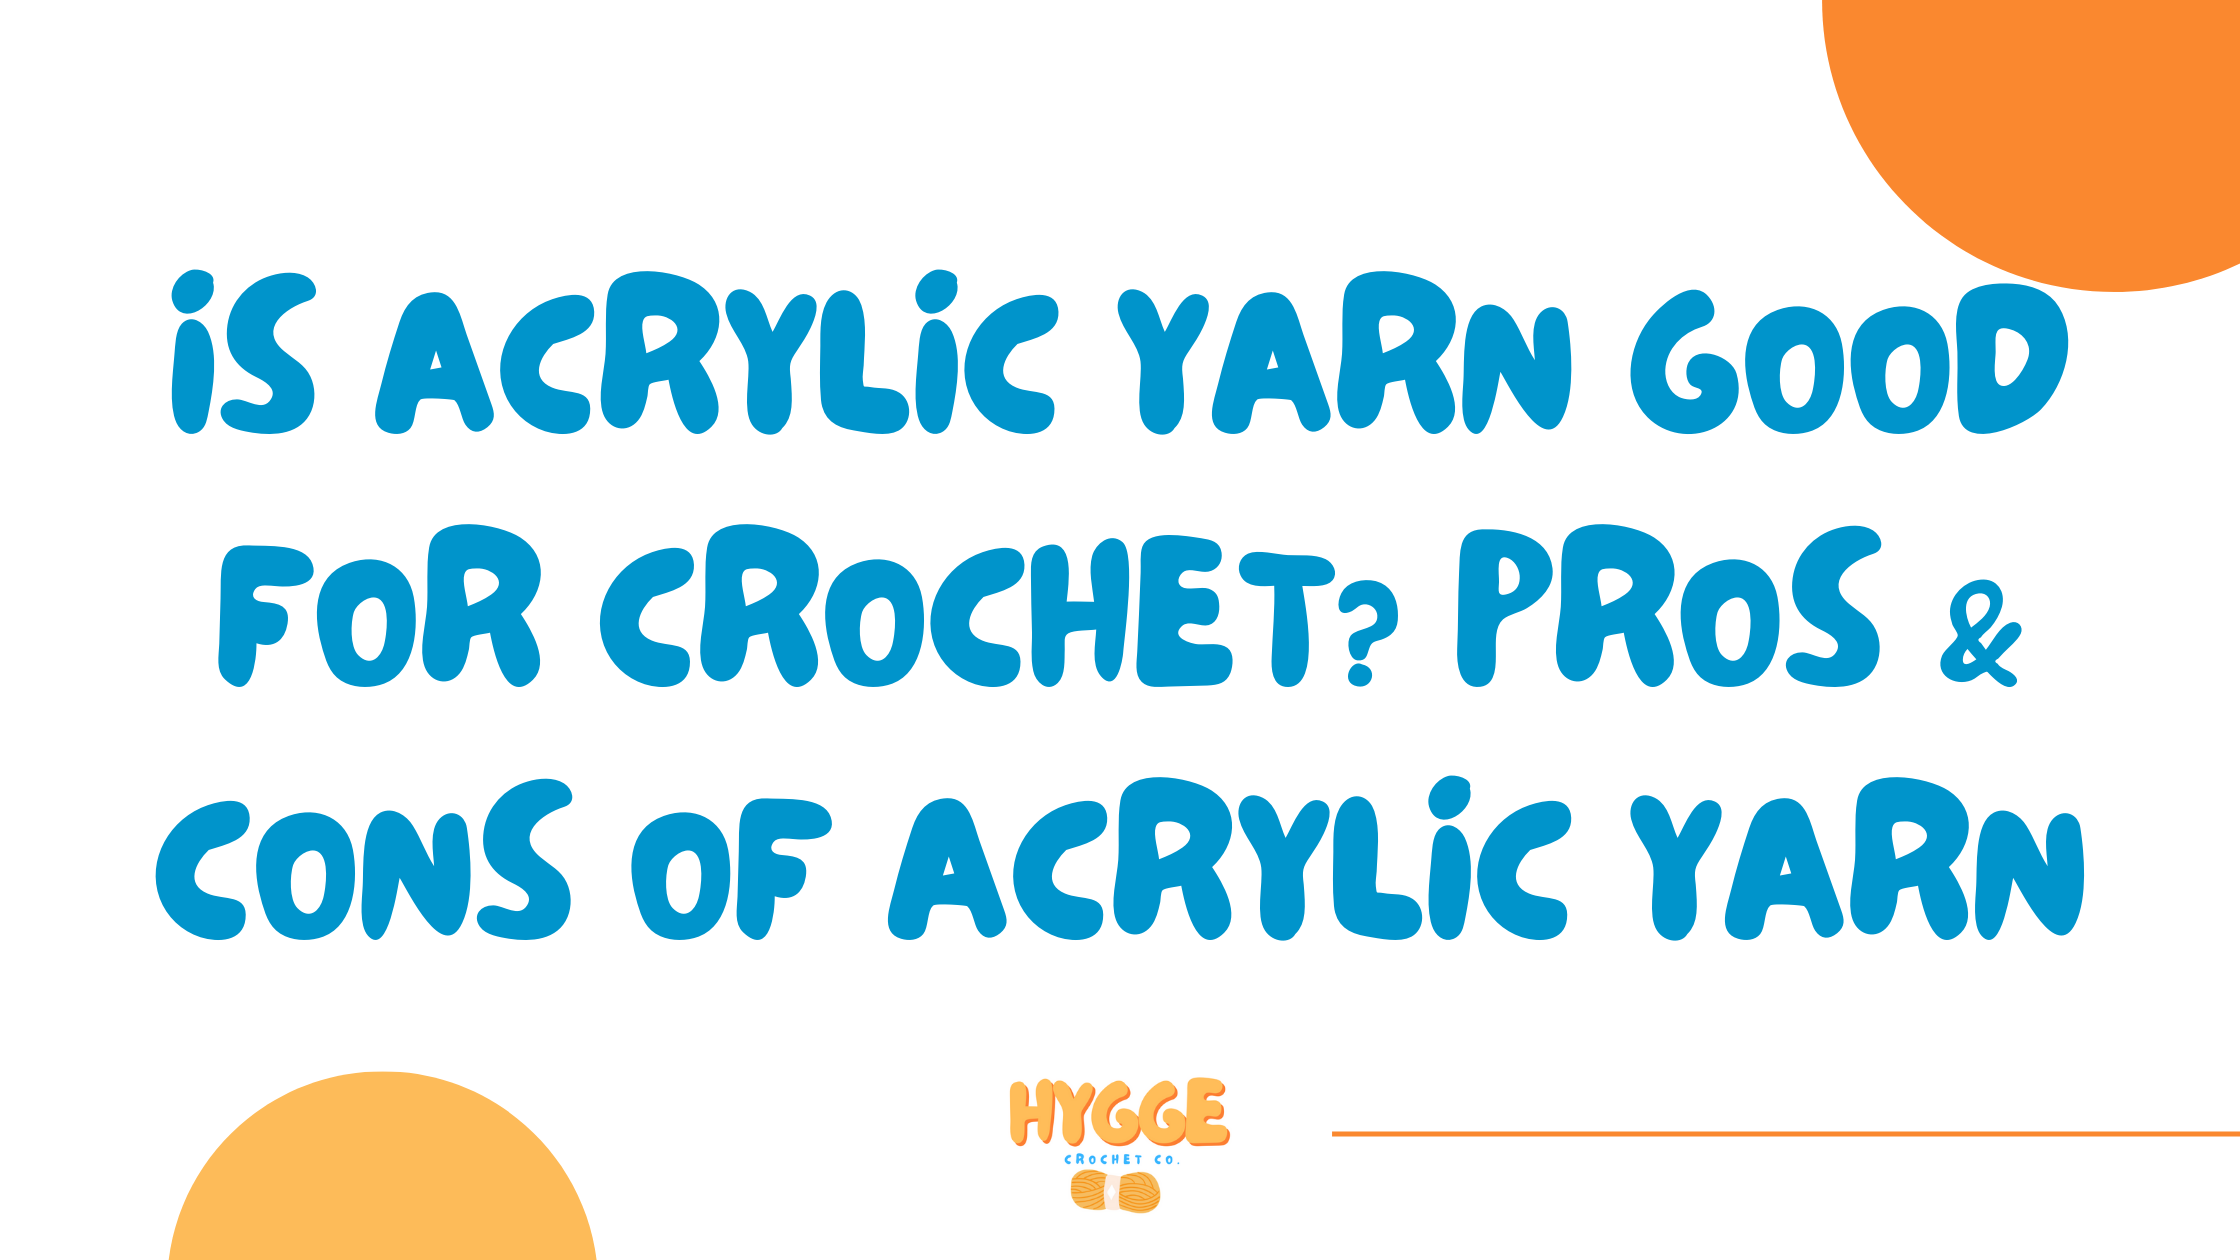 Is Acrylic Yarn Good for Crochet? Pros & Cons of Acrylic Yarn